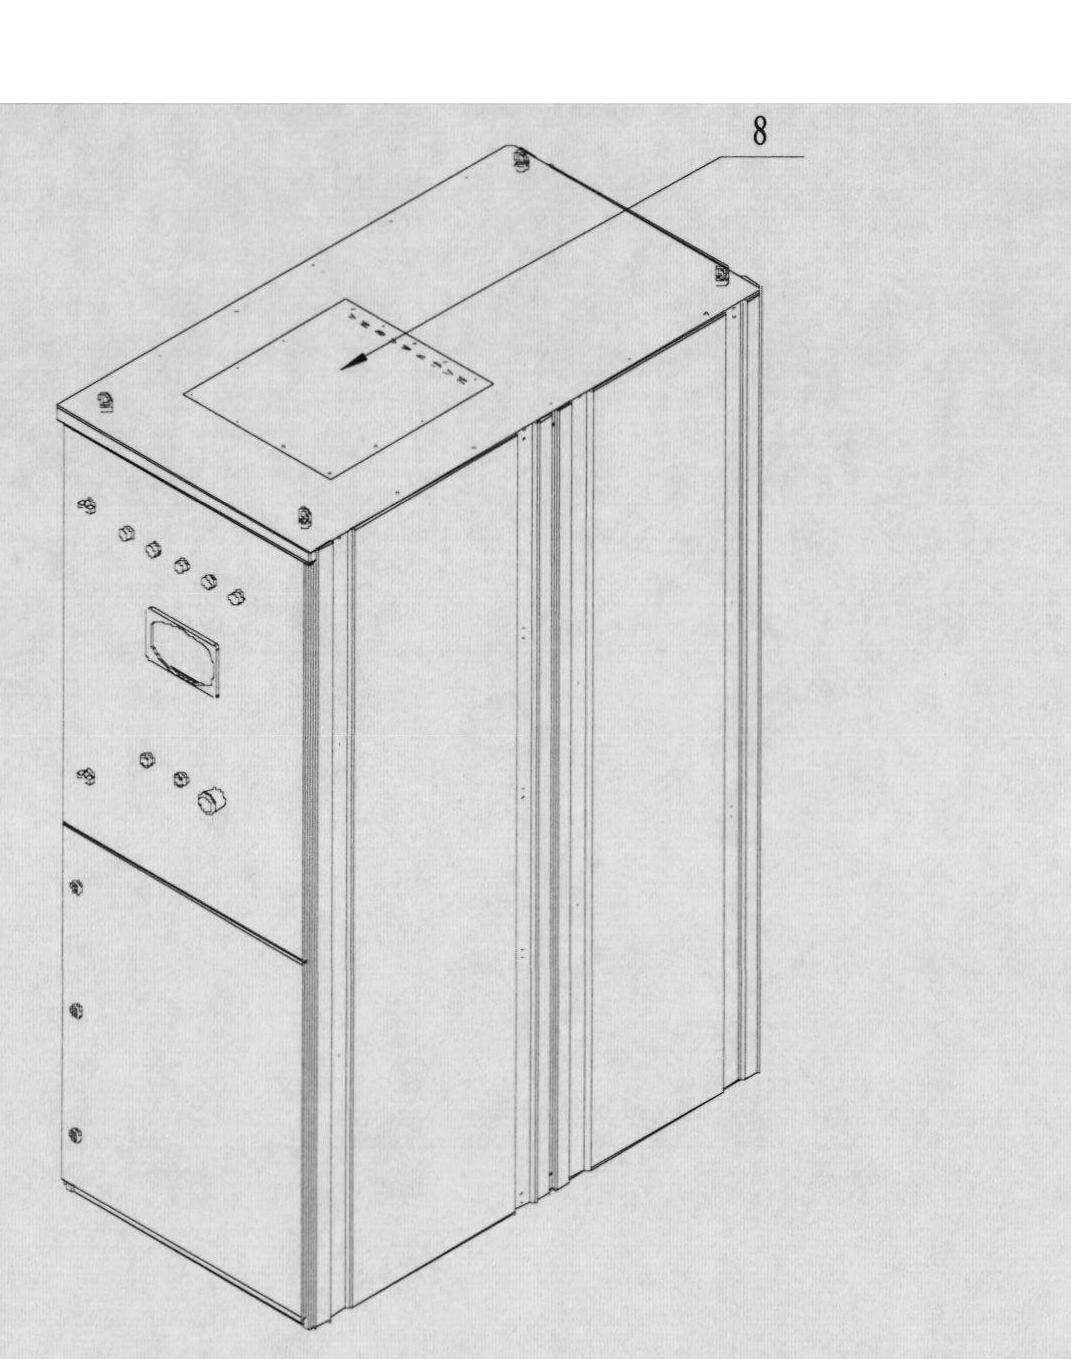 Modularized medium-voltage solid soft starter cabinet